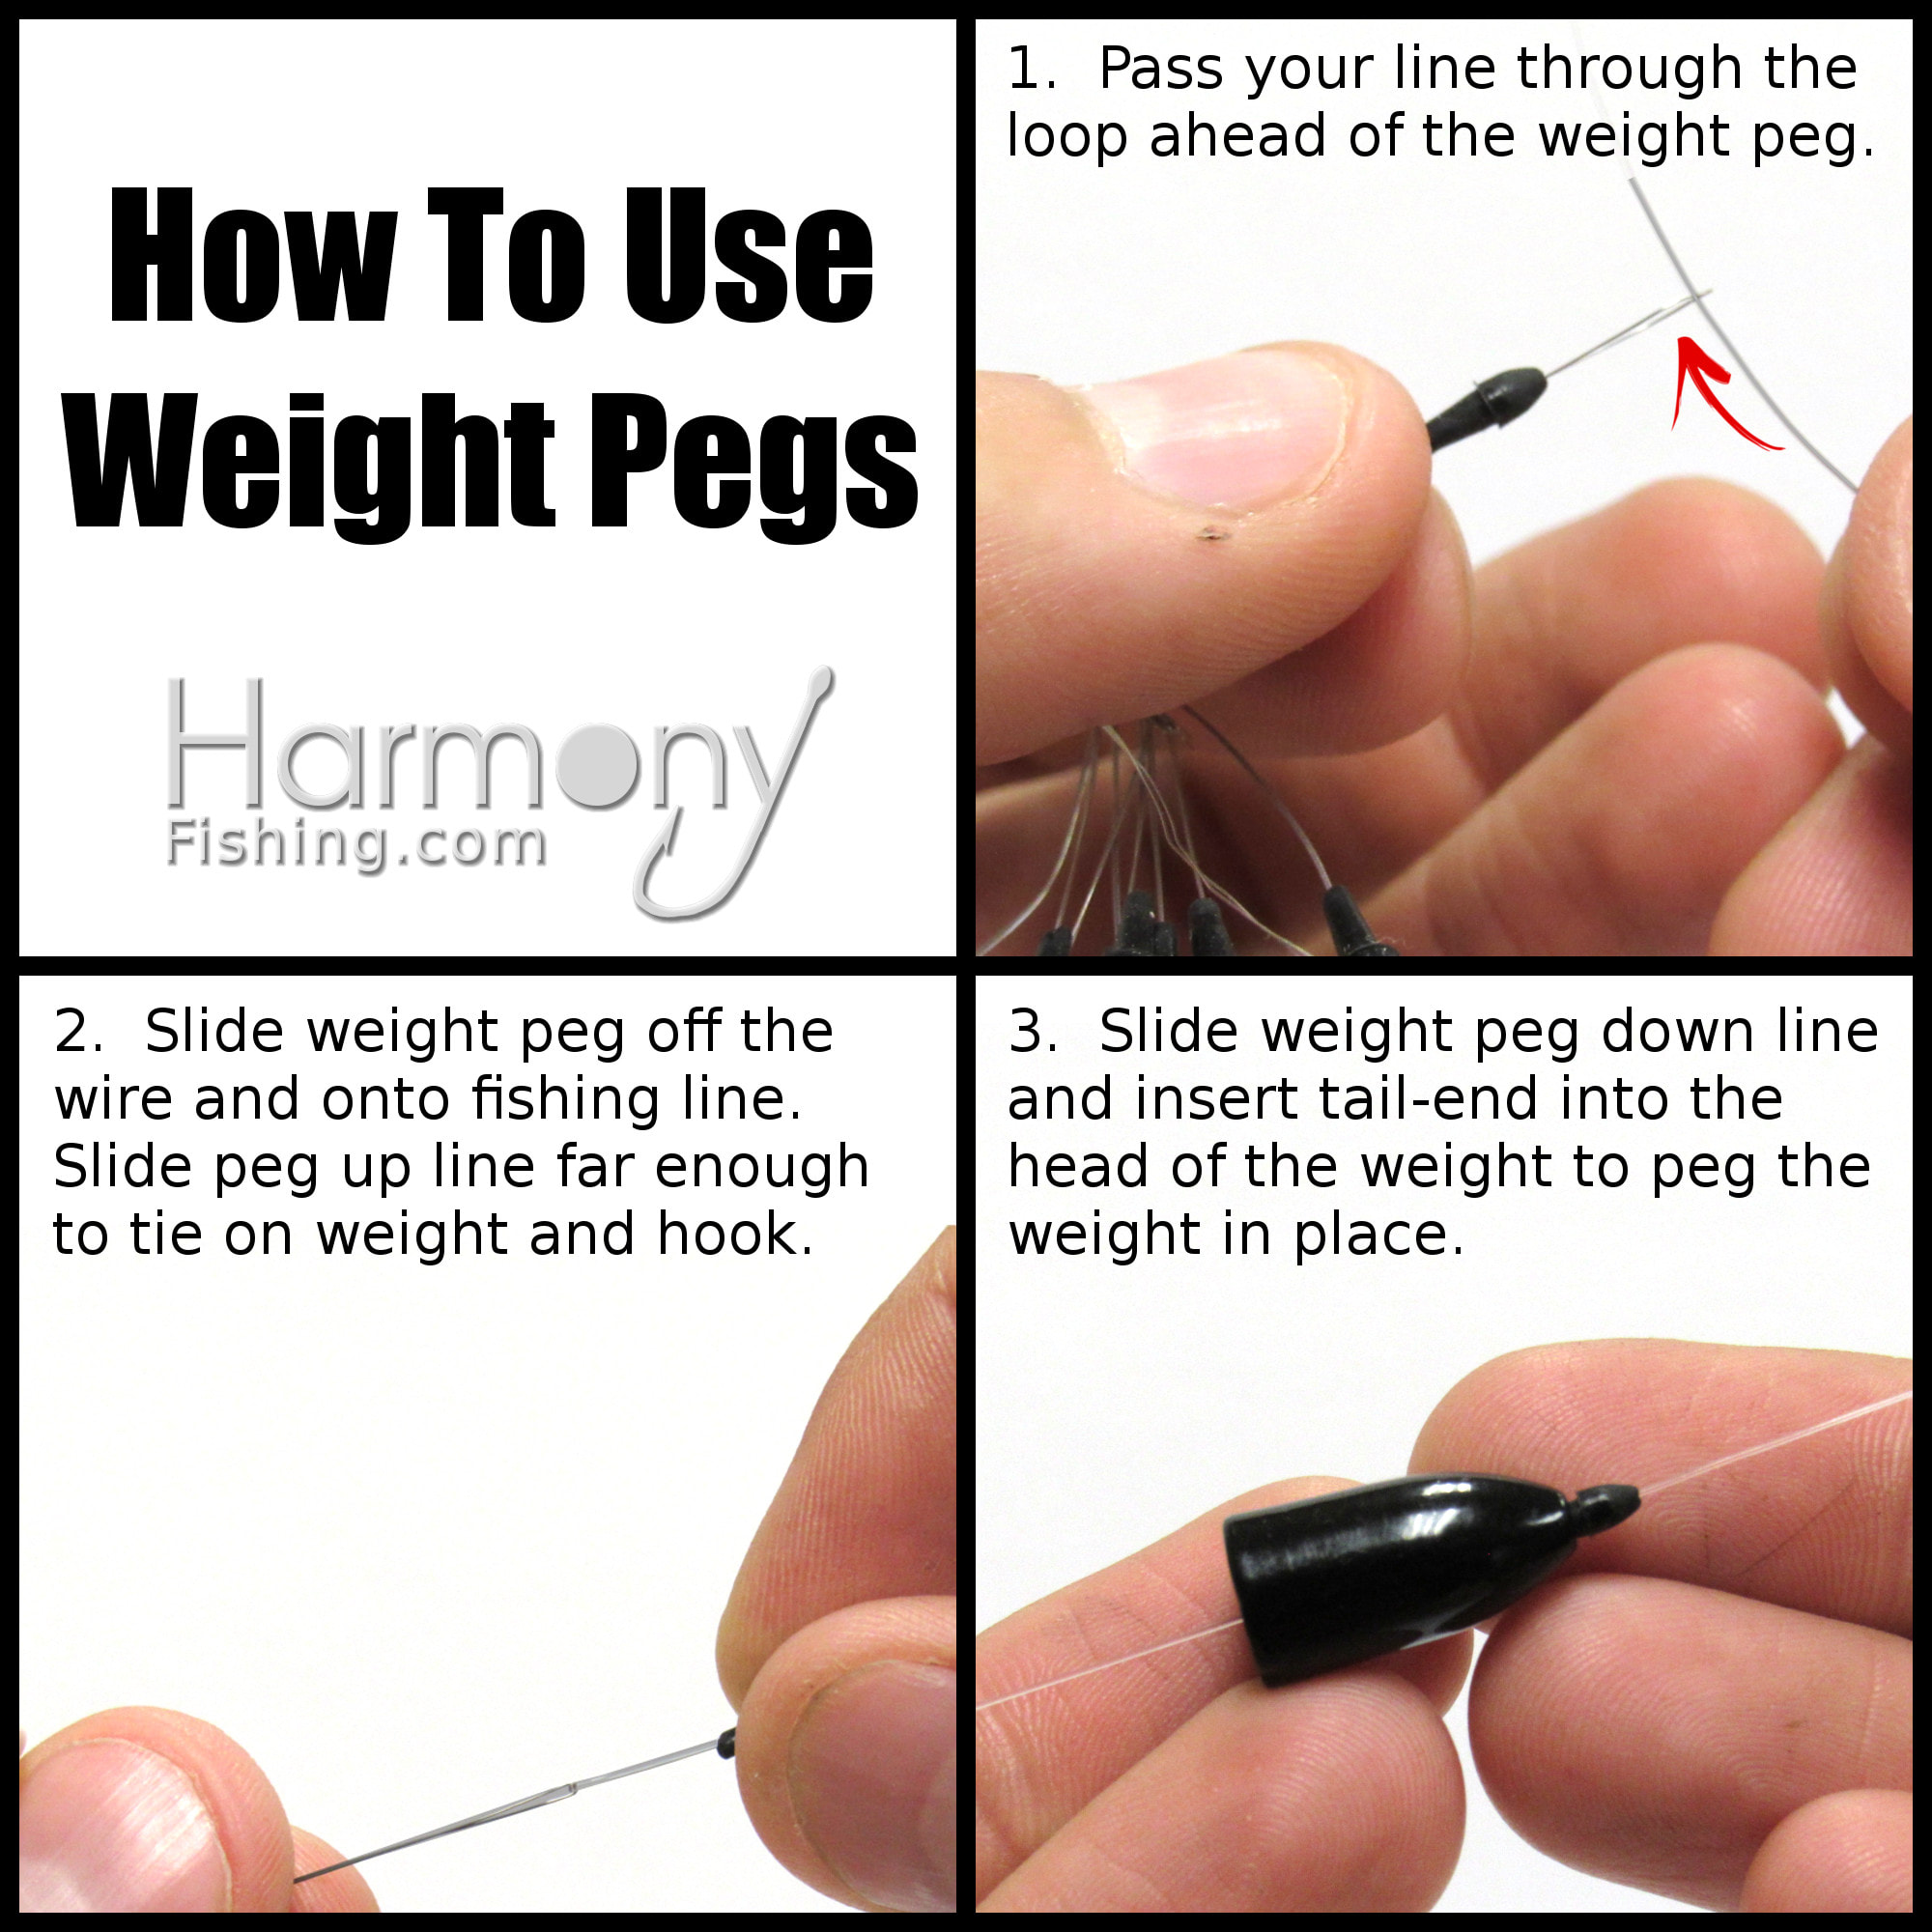 Harmony Fishing - Weight Pegs